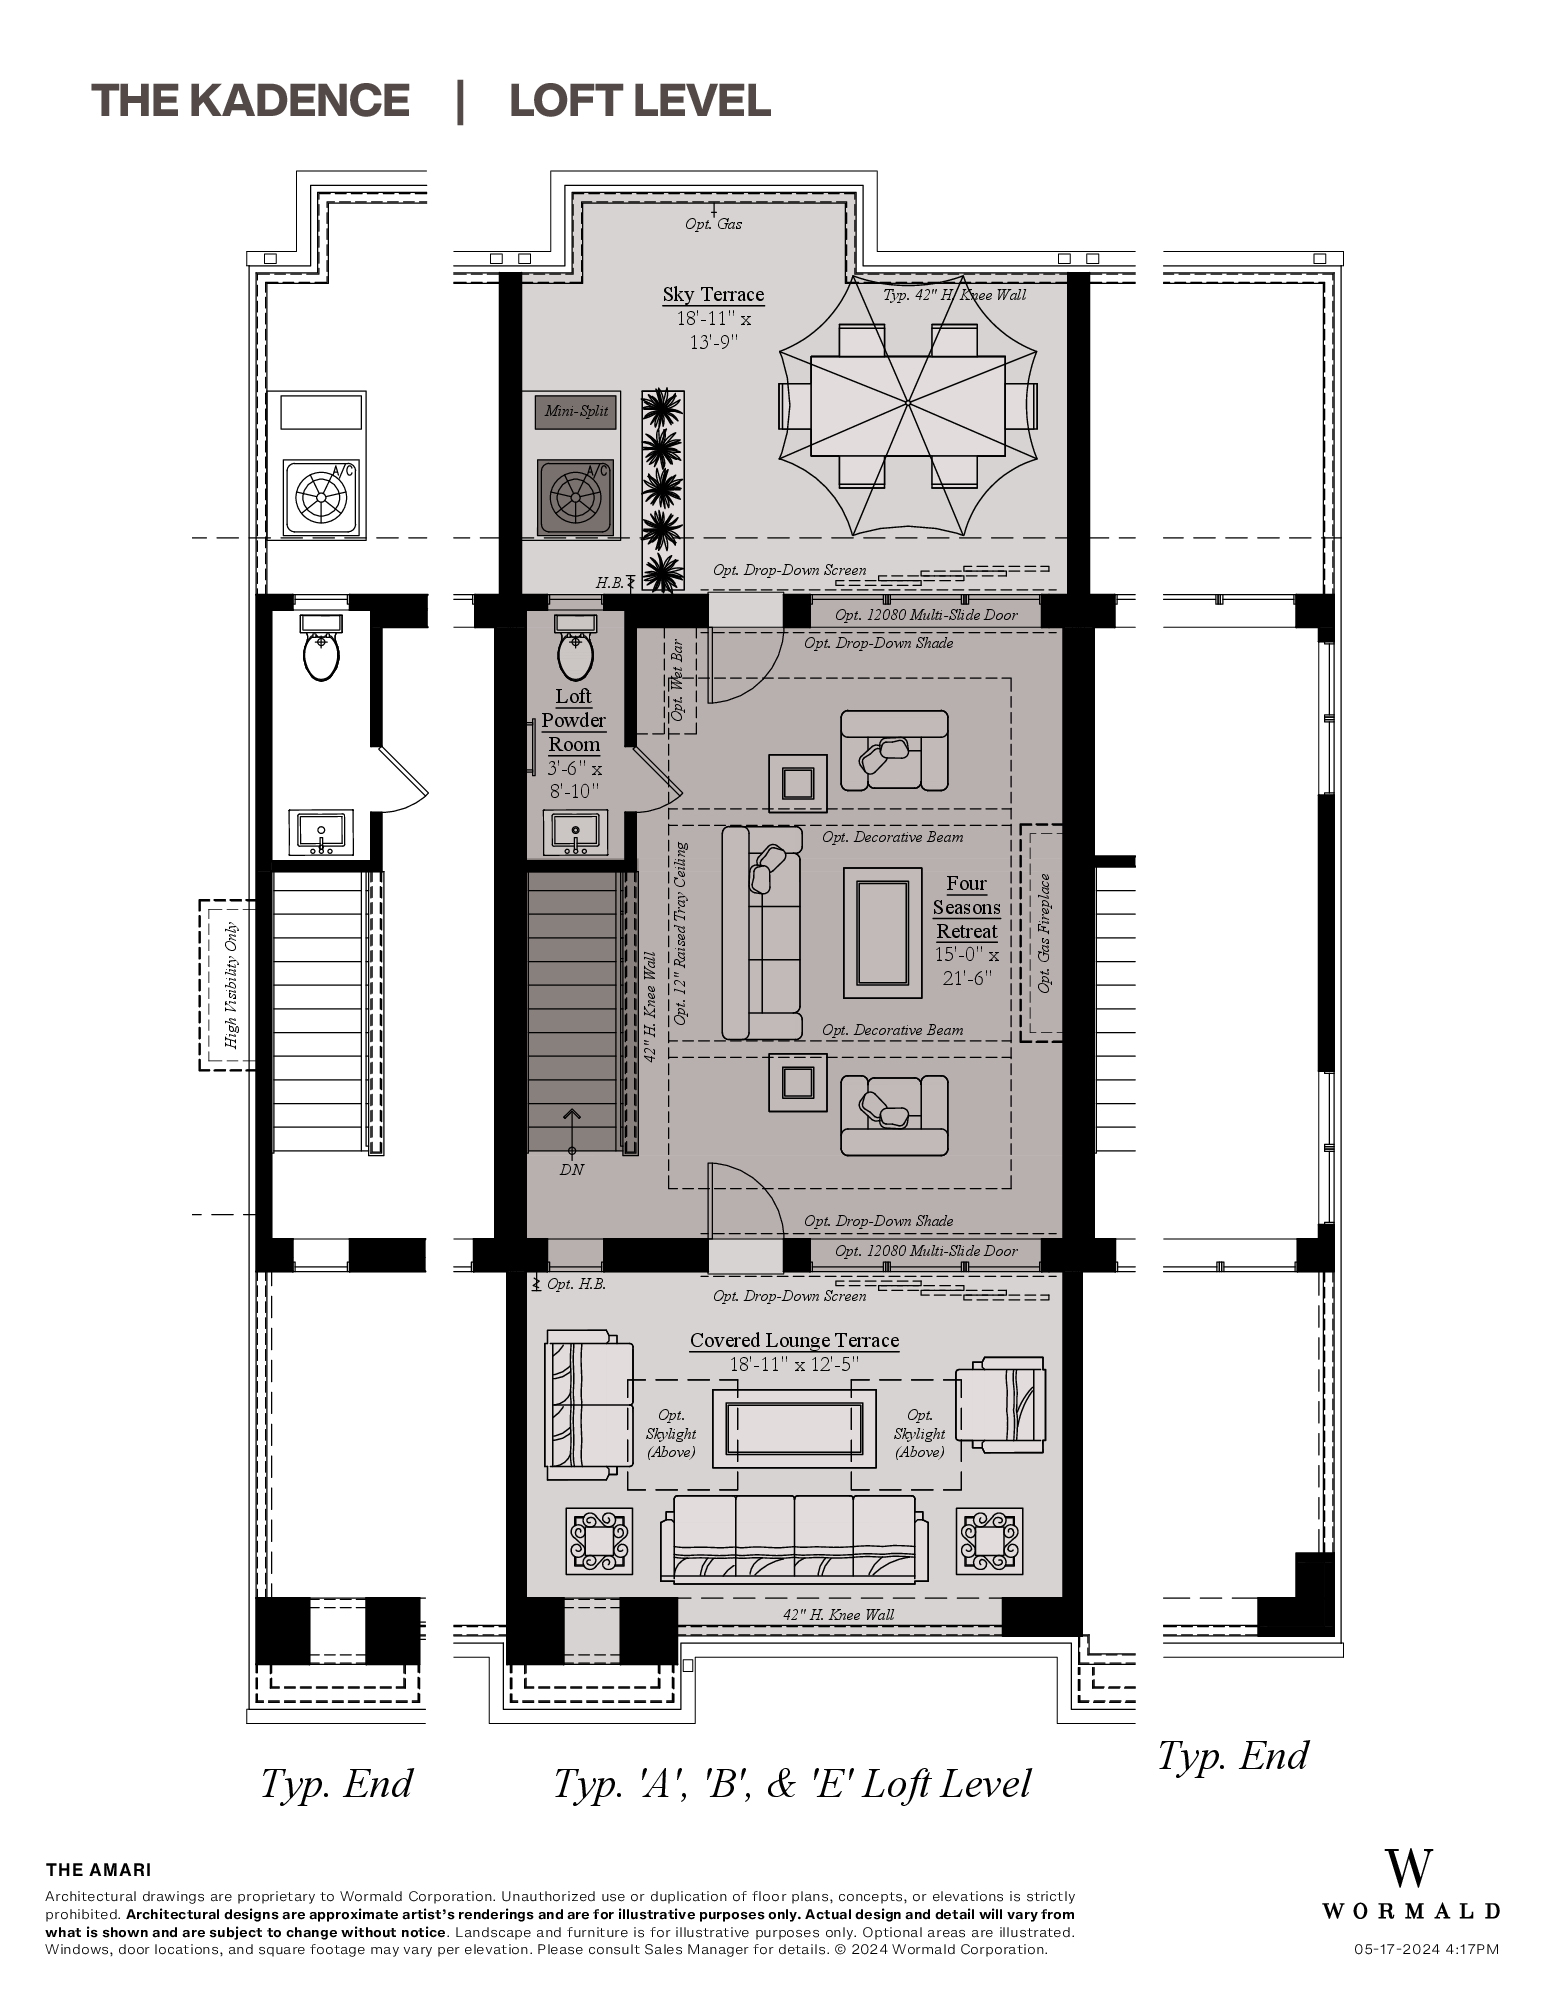 The Kadence floor plan 3